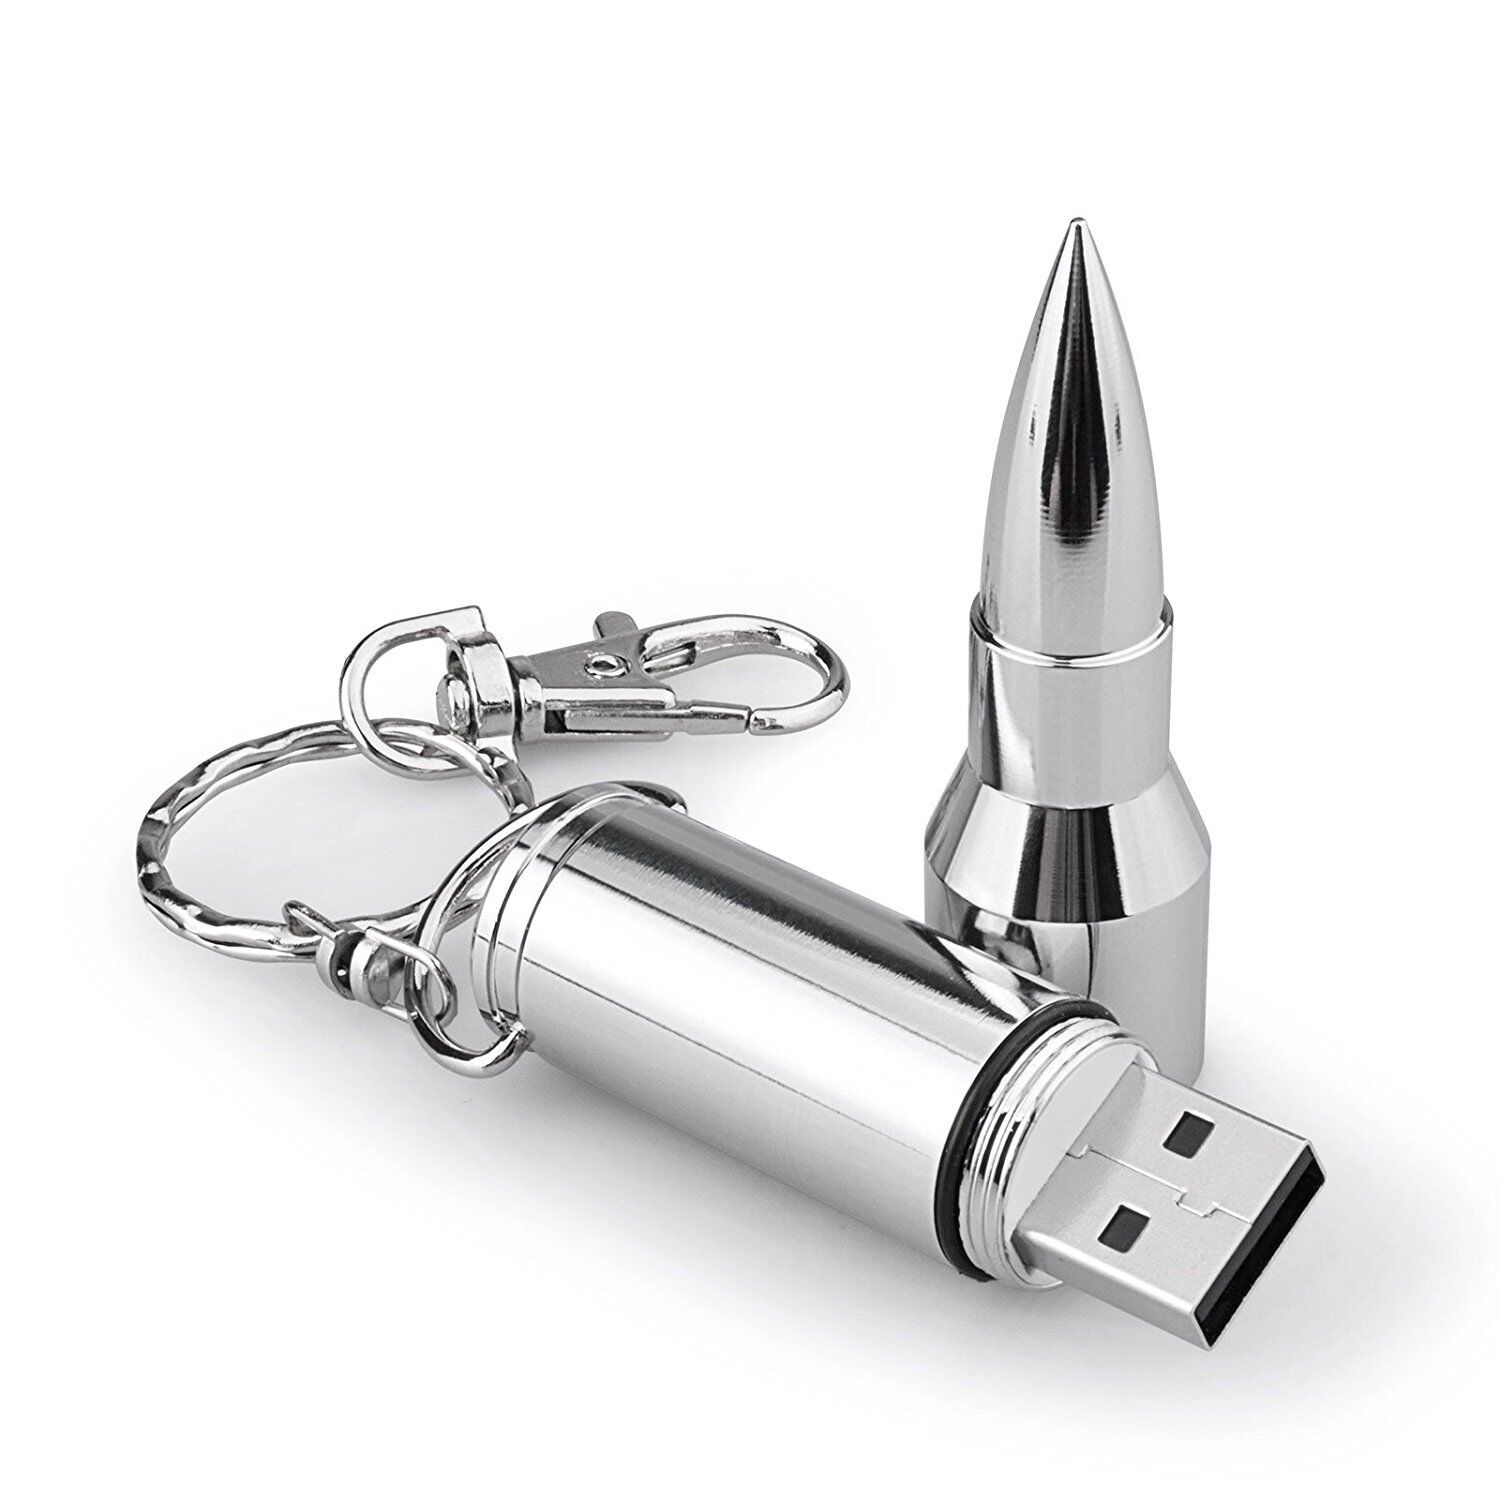 32GB Silver Bullet Model USB2.0 Flash Drive U Disk Pen Drive Memory Stick Gift